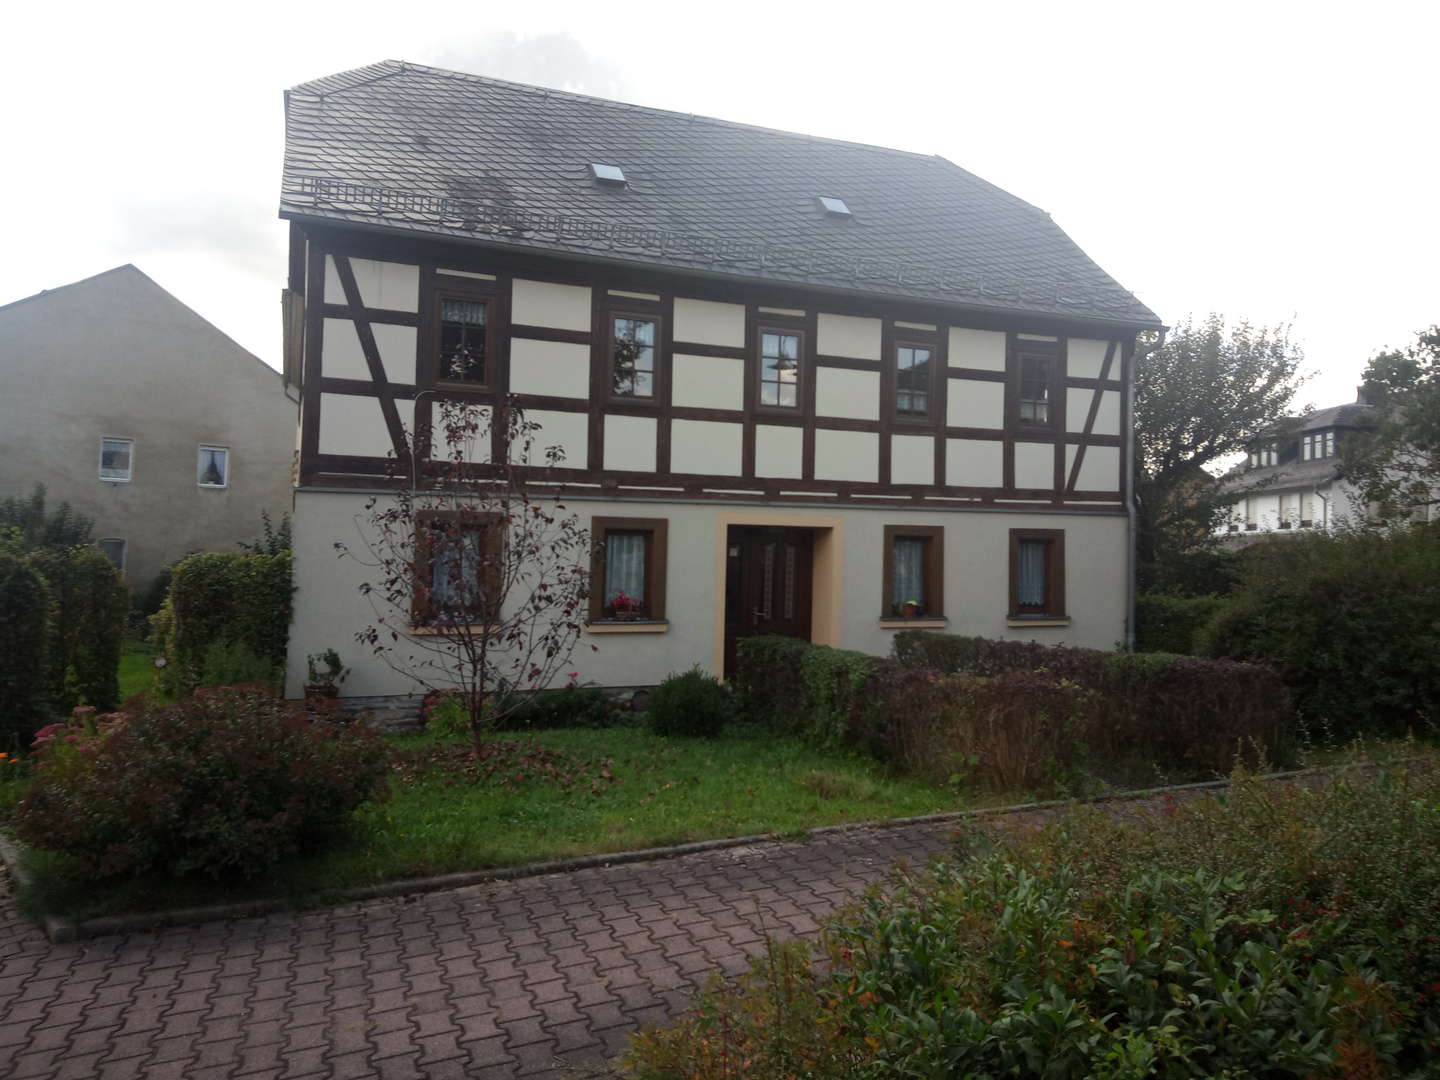 Fachwerkhaus in Berrga/Elster